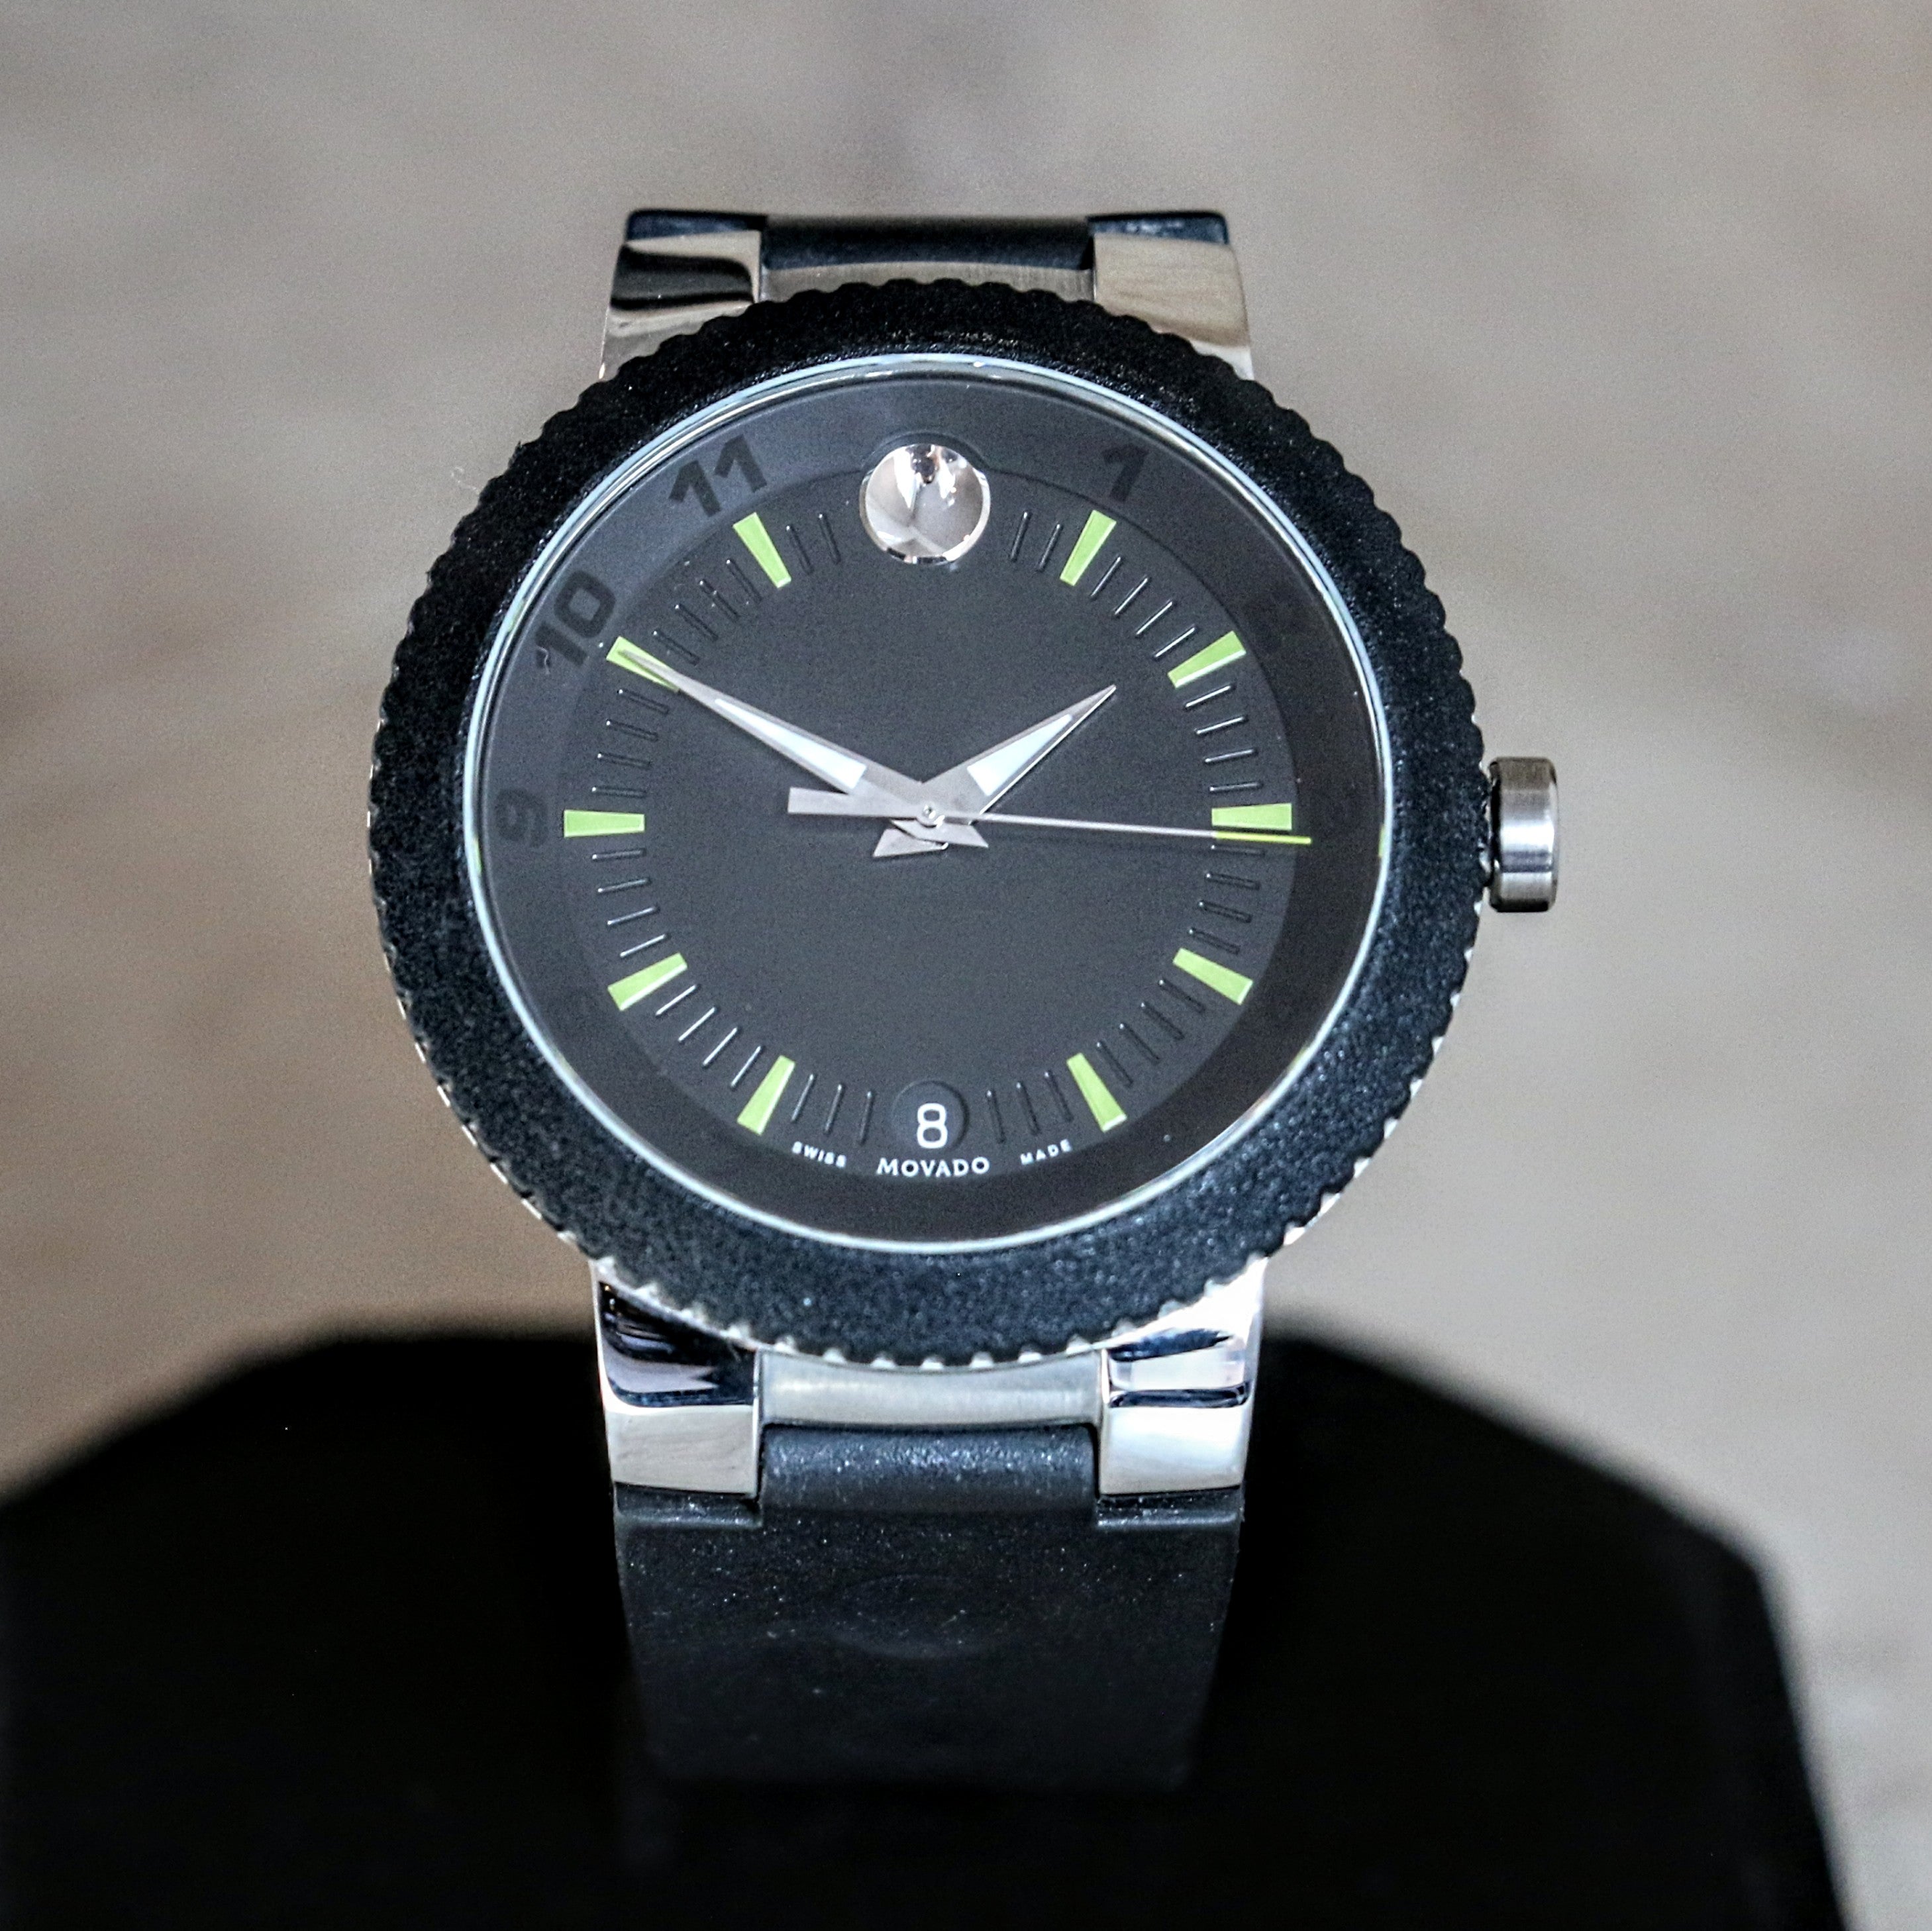 MOVADO Sport Edge Watch Black Dial Ref. 54.30.1286 Stainless Steel Case Wristwatch